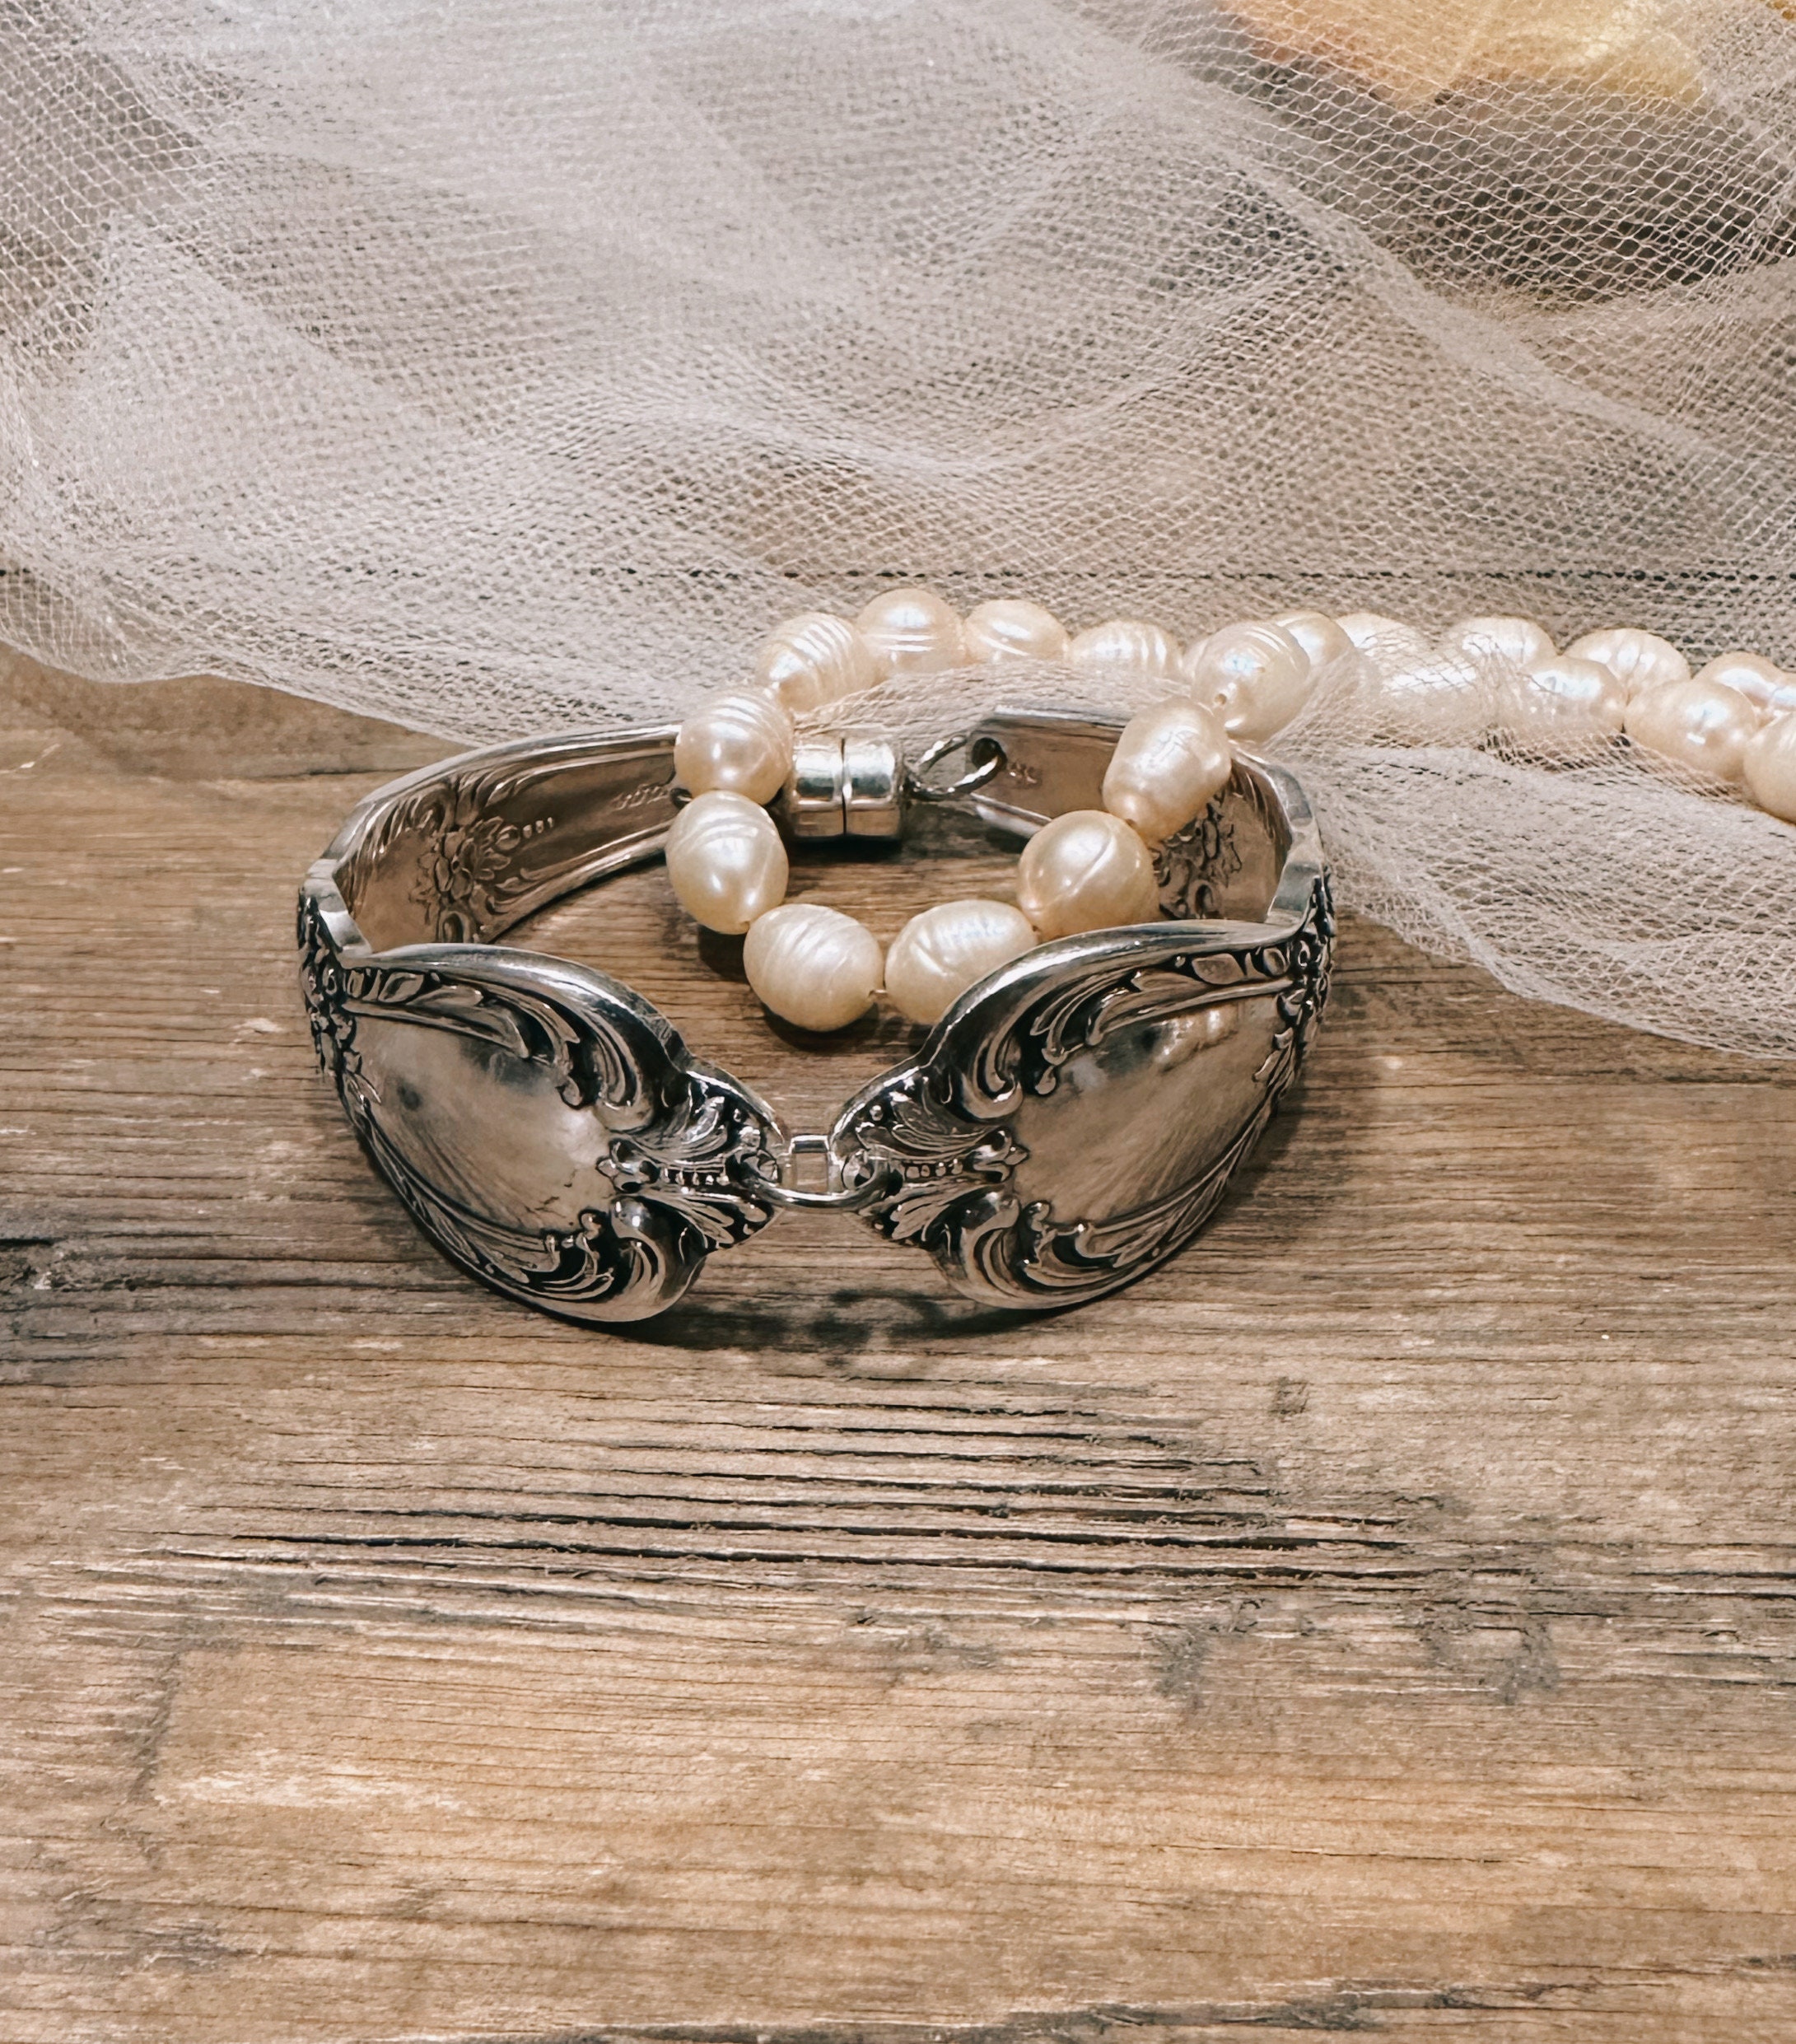 SPOON RING BENDER Make Rings-Silver,Gemstone Beads,Wire,Craft,Vintage  Jewelry